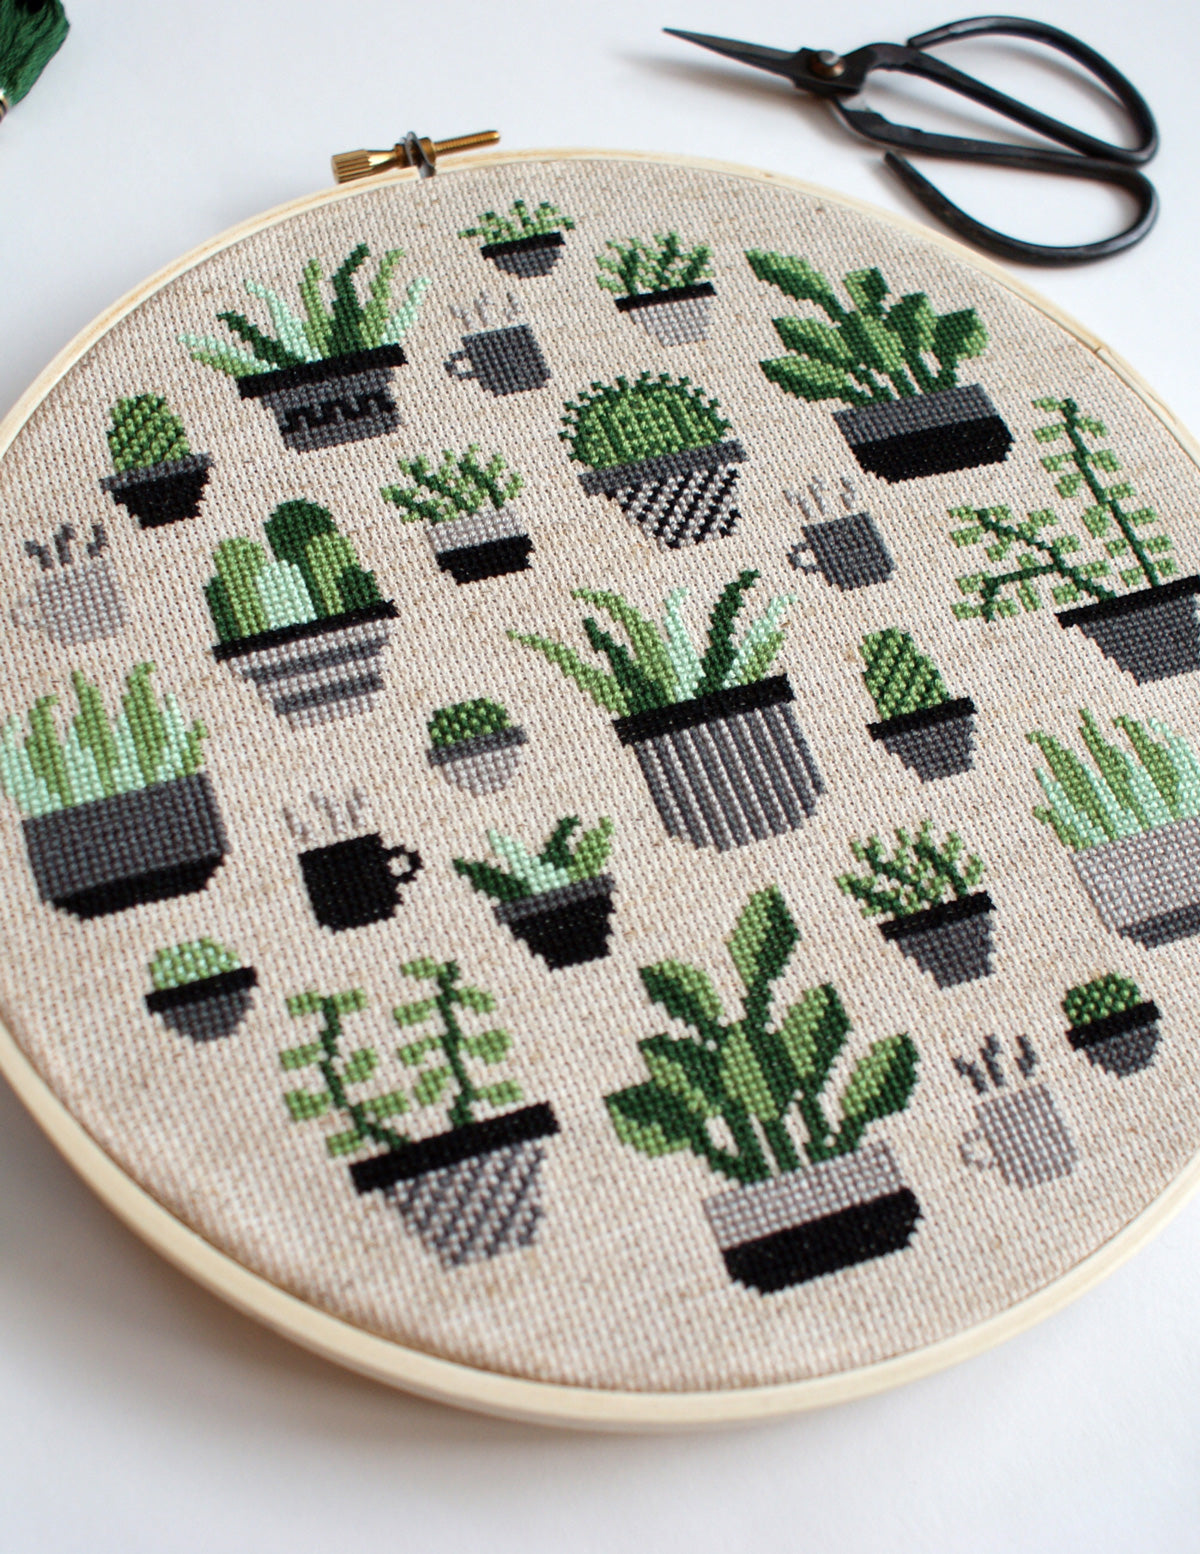 Plant Life Mini Cross Stitch Kit - Stitched Modern